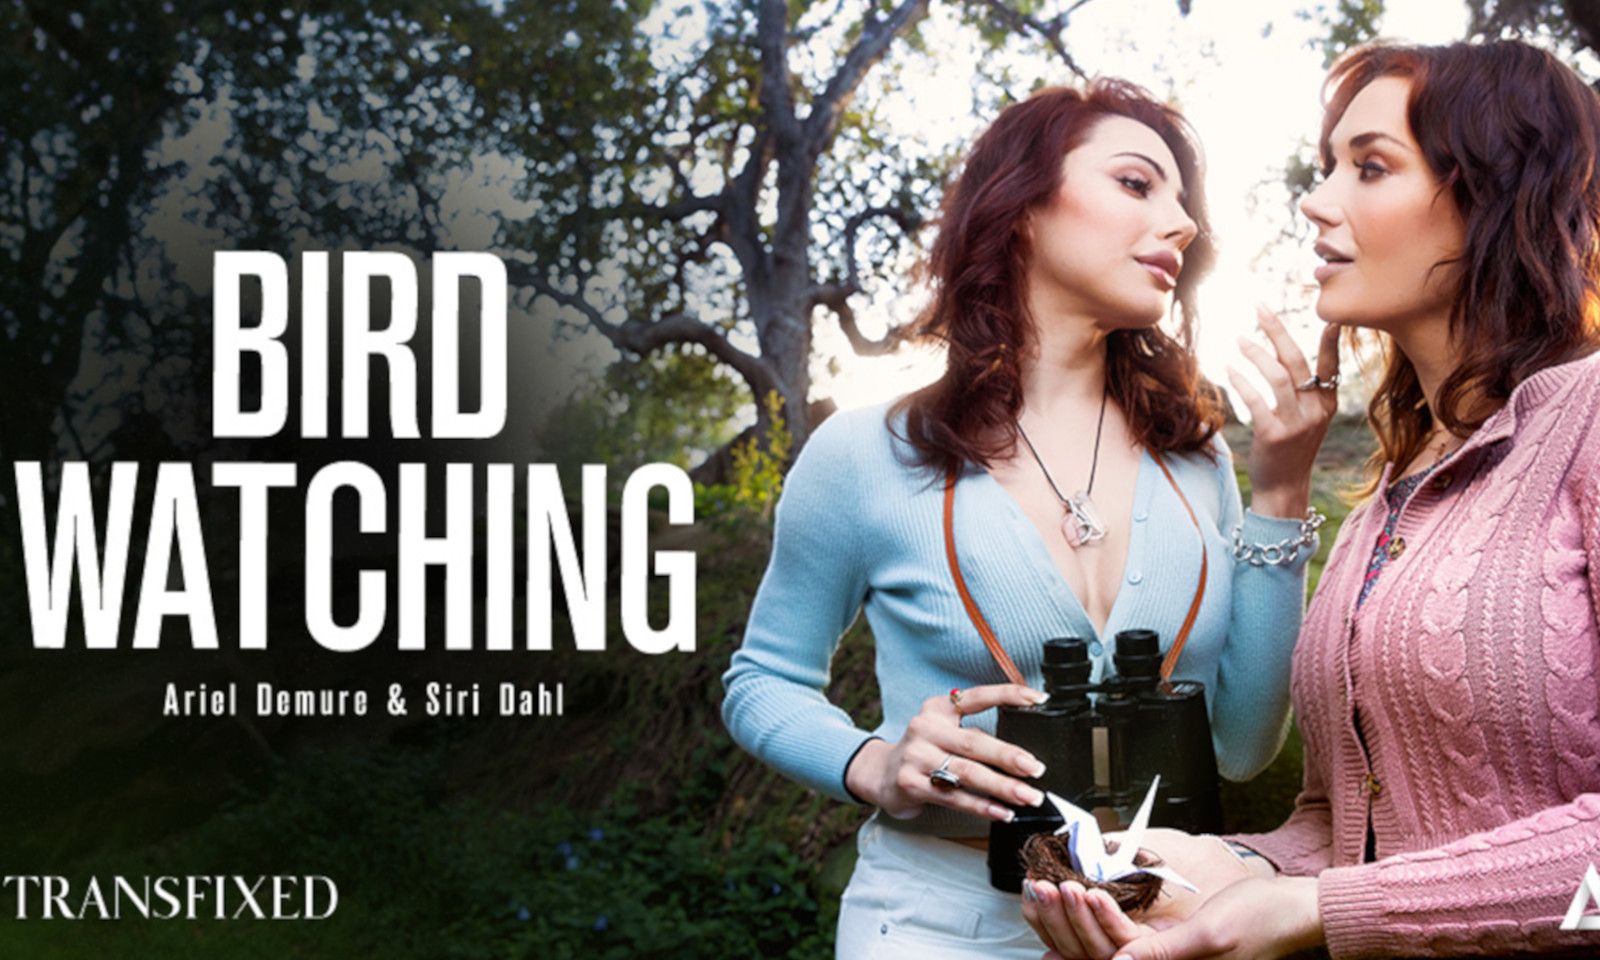 Transfixed Marks the Return of Siri Dahl in 'Bird Watching'